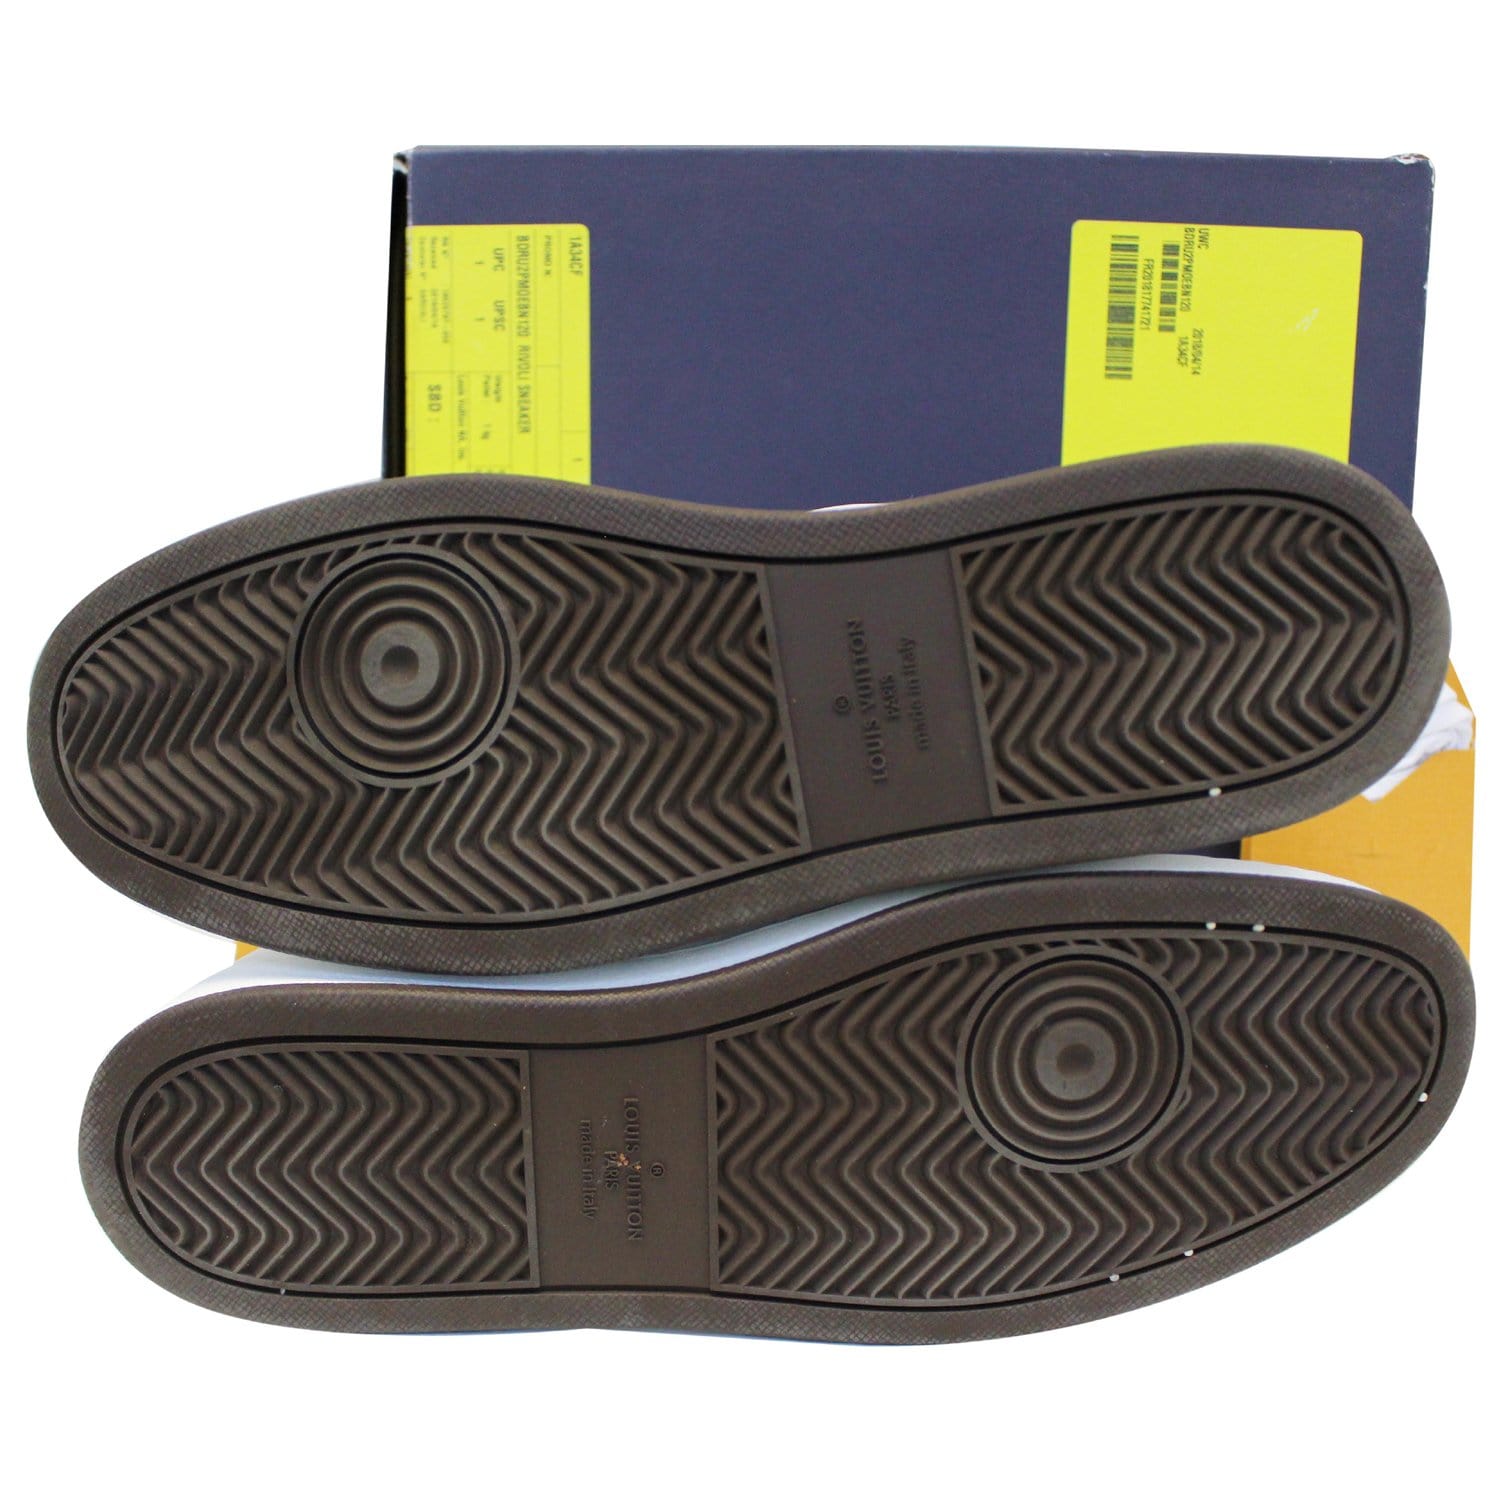 Rivoli Sneaker Boot Classic Hi Top Shoe Black Leather Designers Shoes  Runner Trainer Snekaers From Bizshoes, $64.77